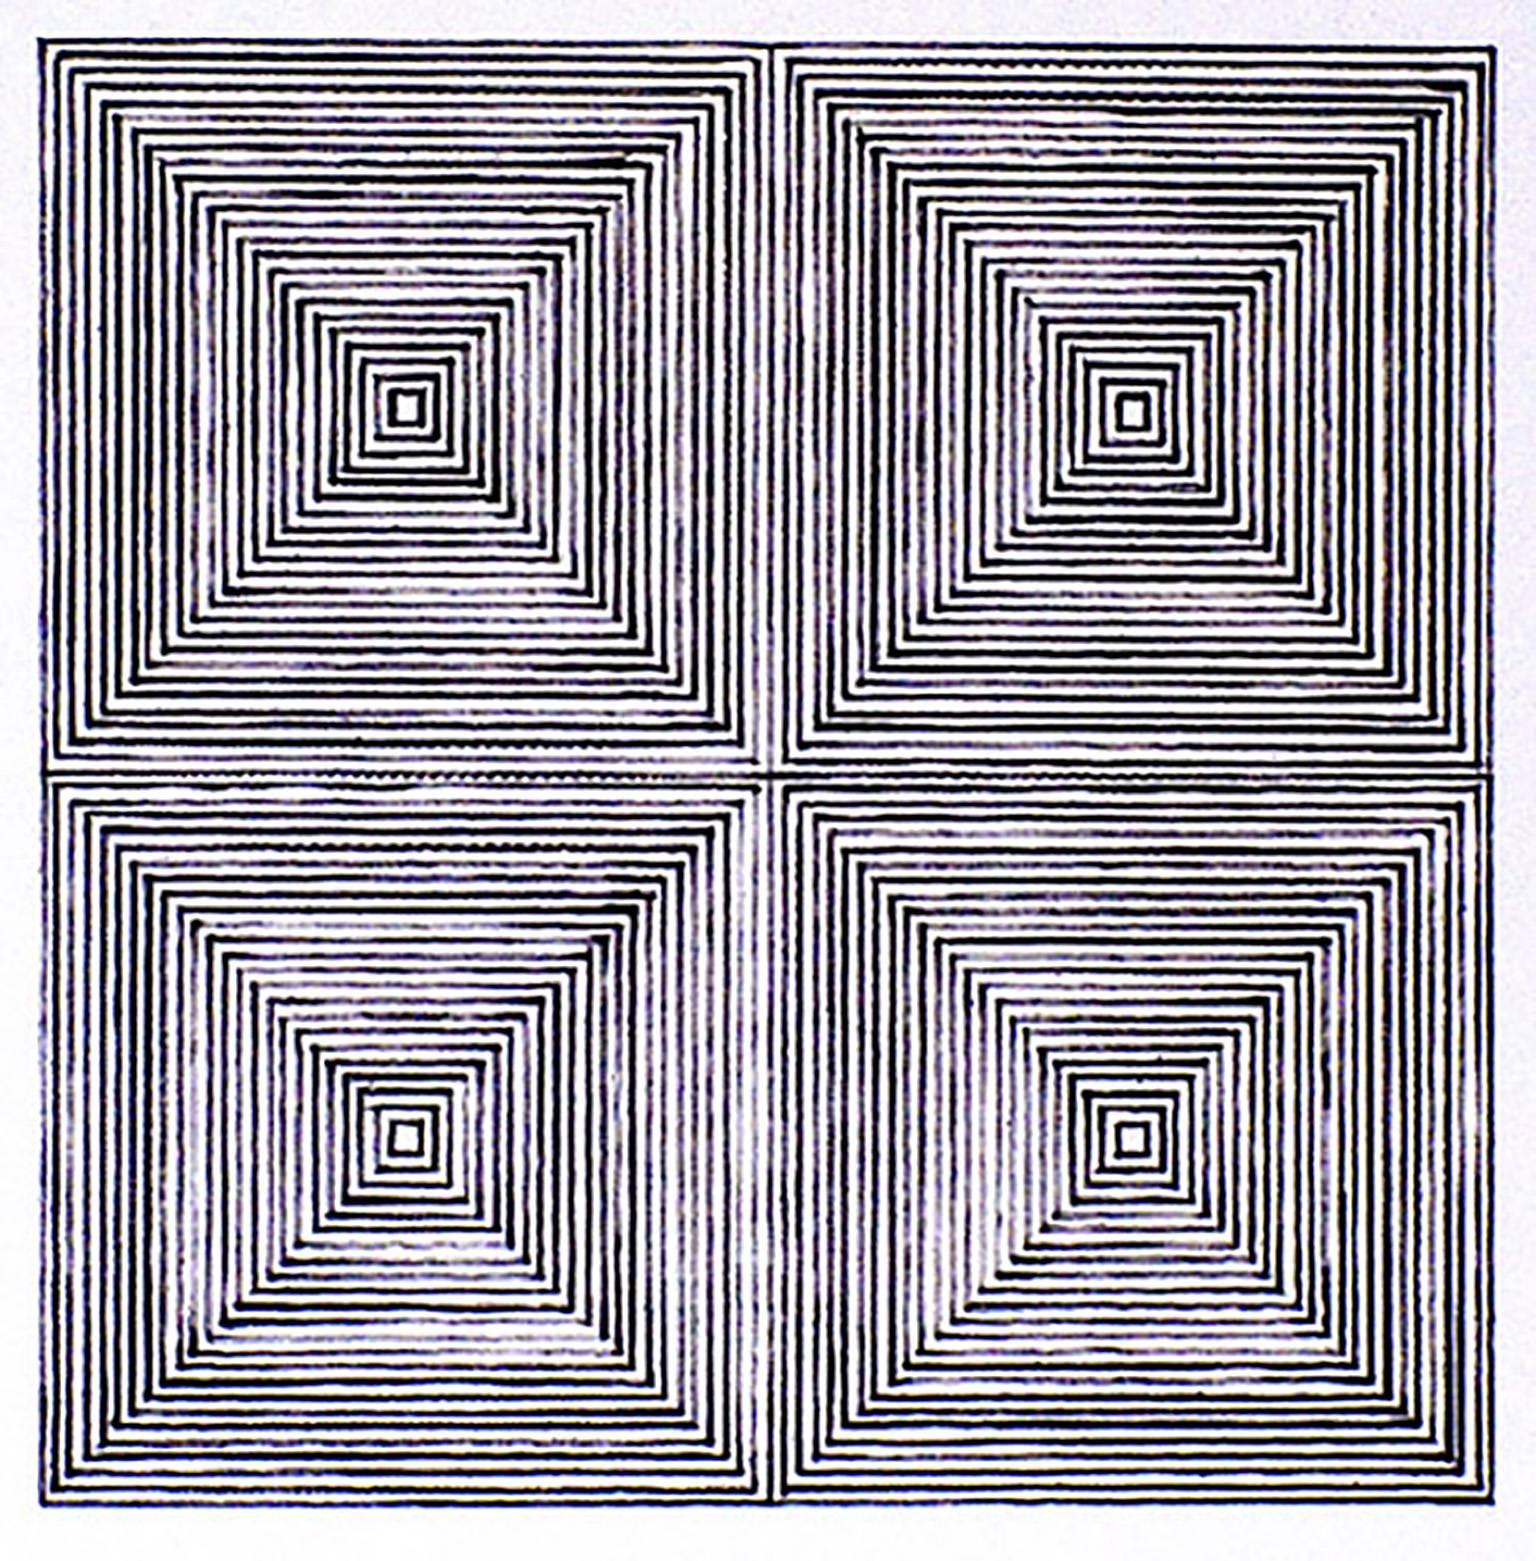 Abstract Print Jonathan Higgins - Diamants et carrés